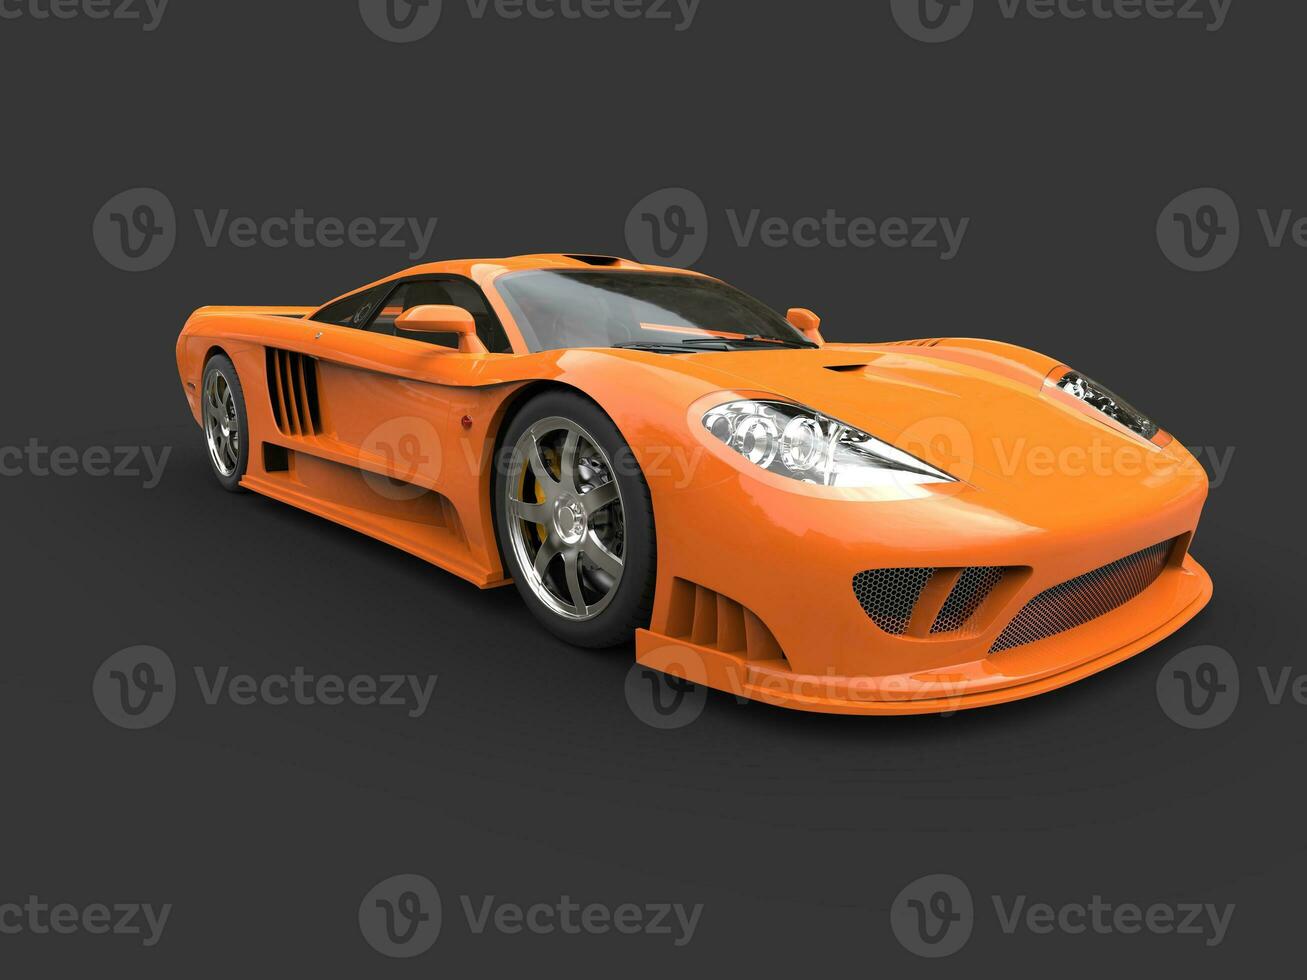 heet oranje modern super ras auto foto